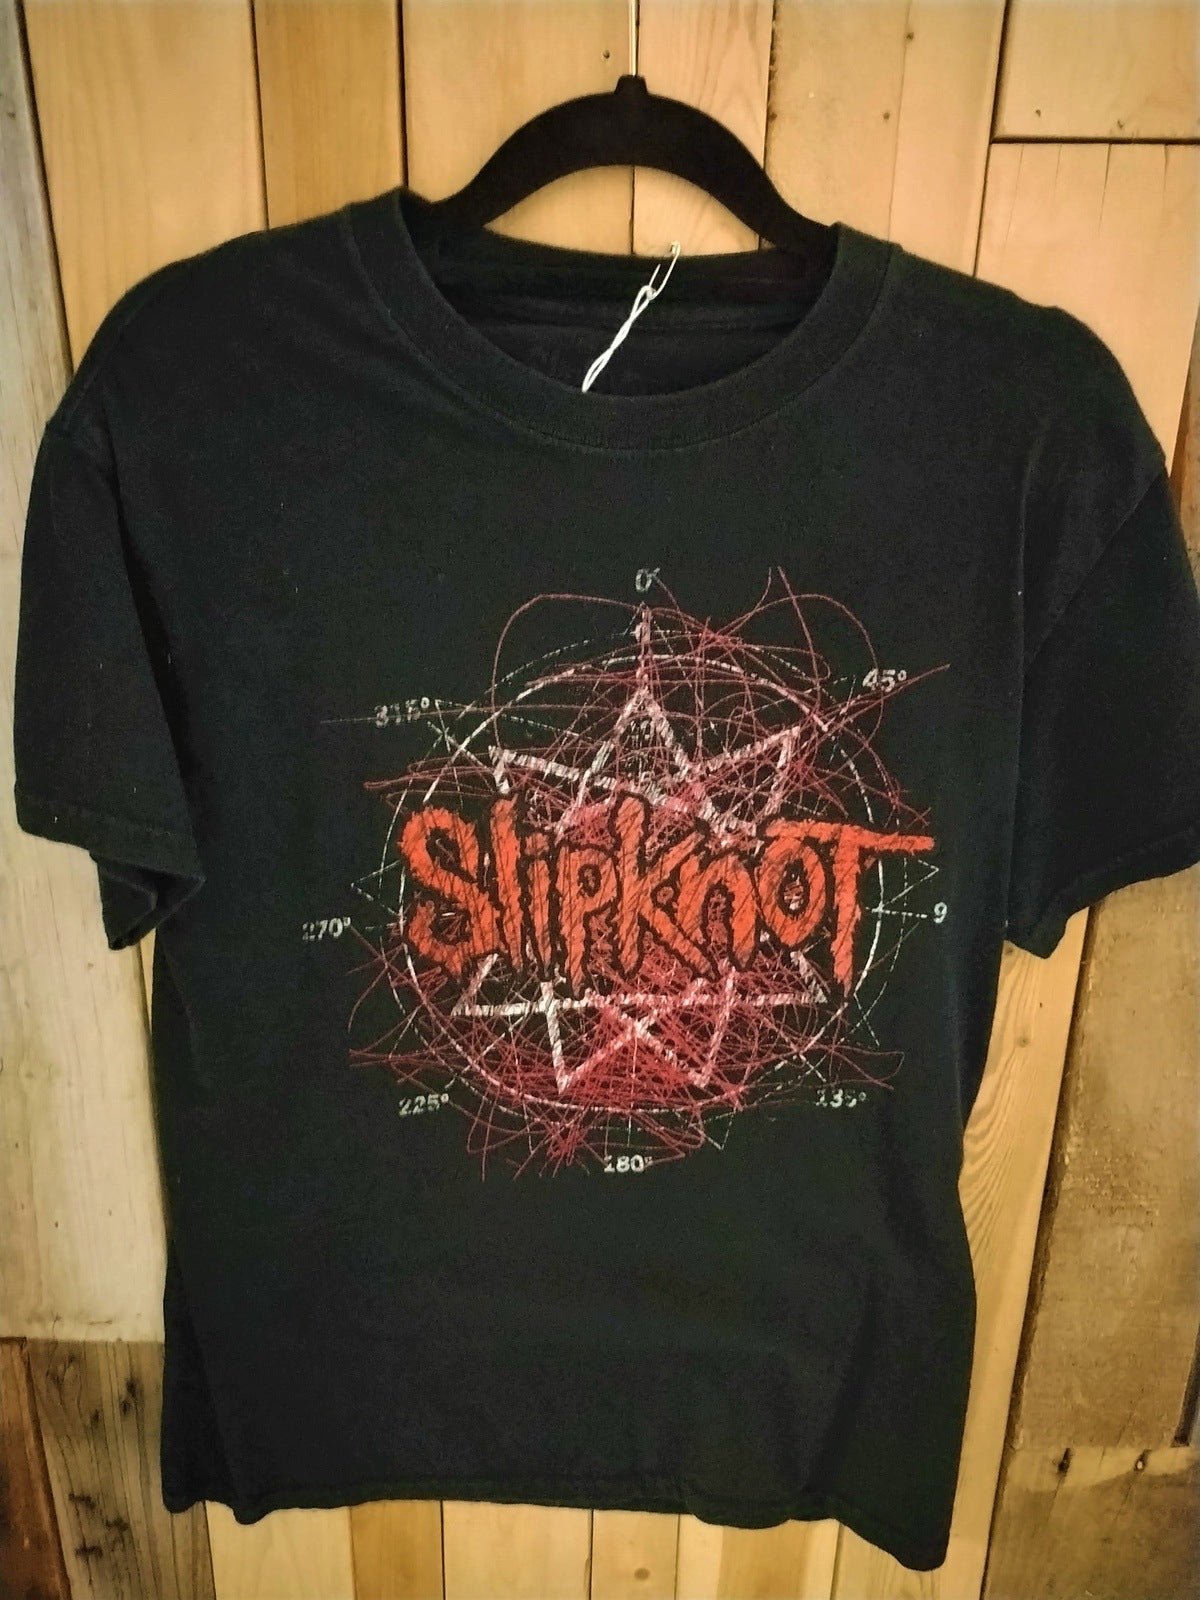 Slipknot Tee Shirt Size Small